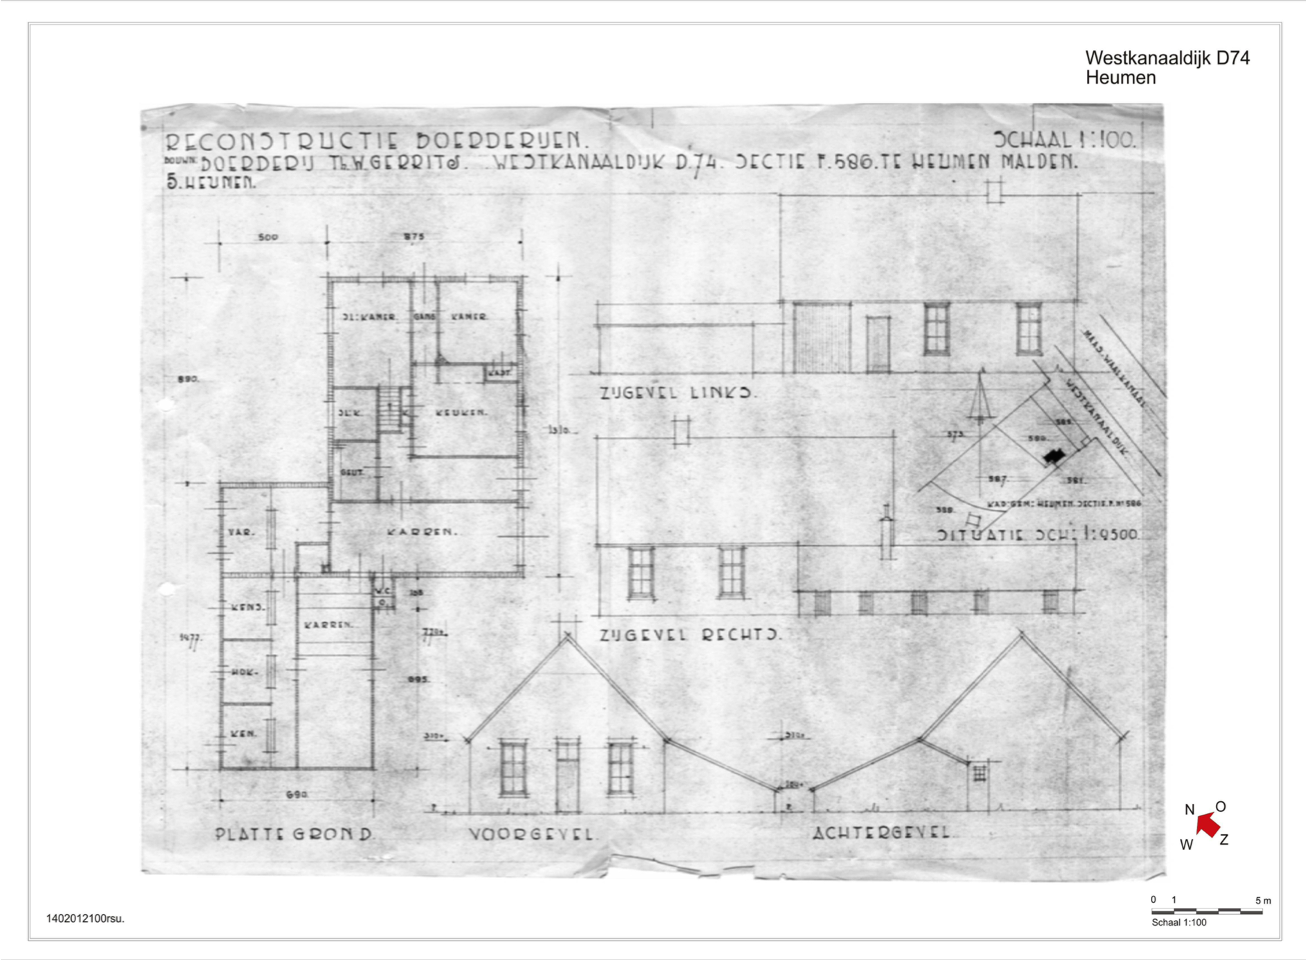 Illustration 1. Image of original architectural drawing Westkanaaldijk D74, showing plan, views and situation plan